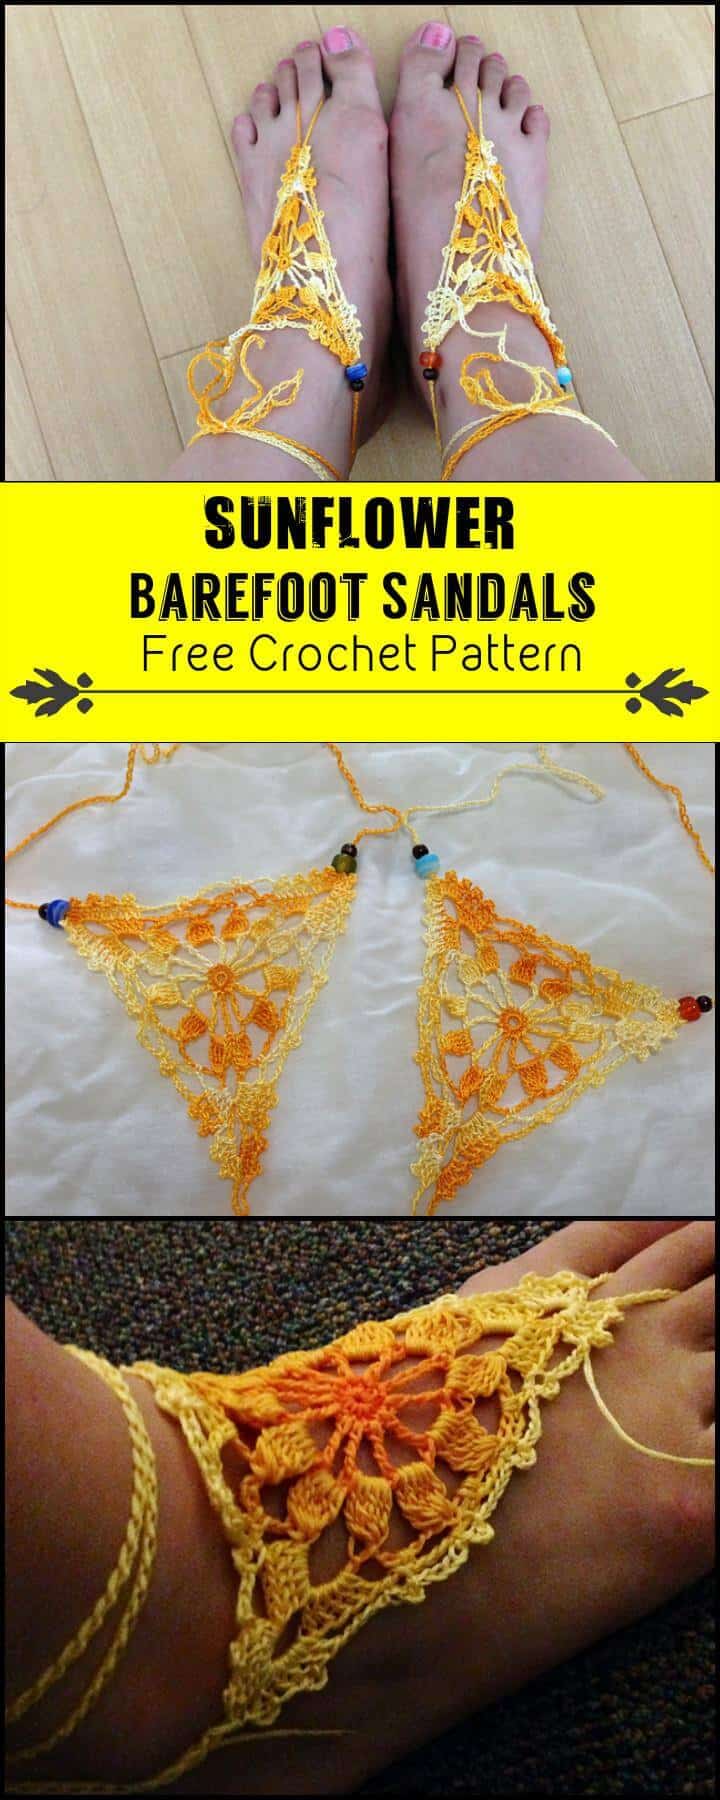 Sunflower Barefoot Sandals Free Crochet Pattern